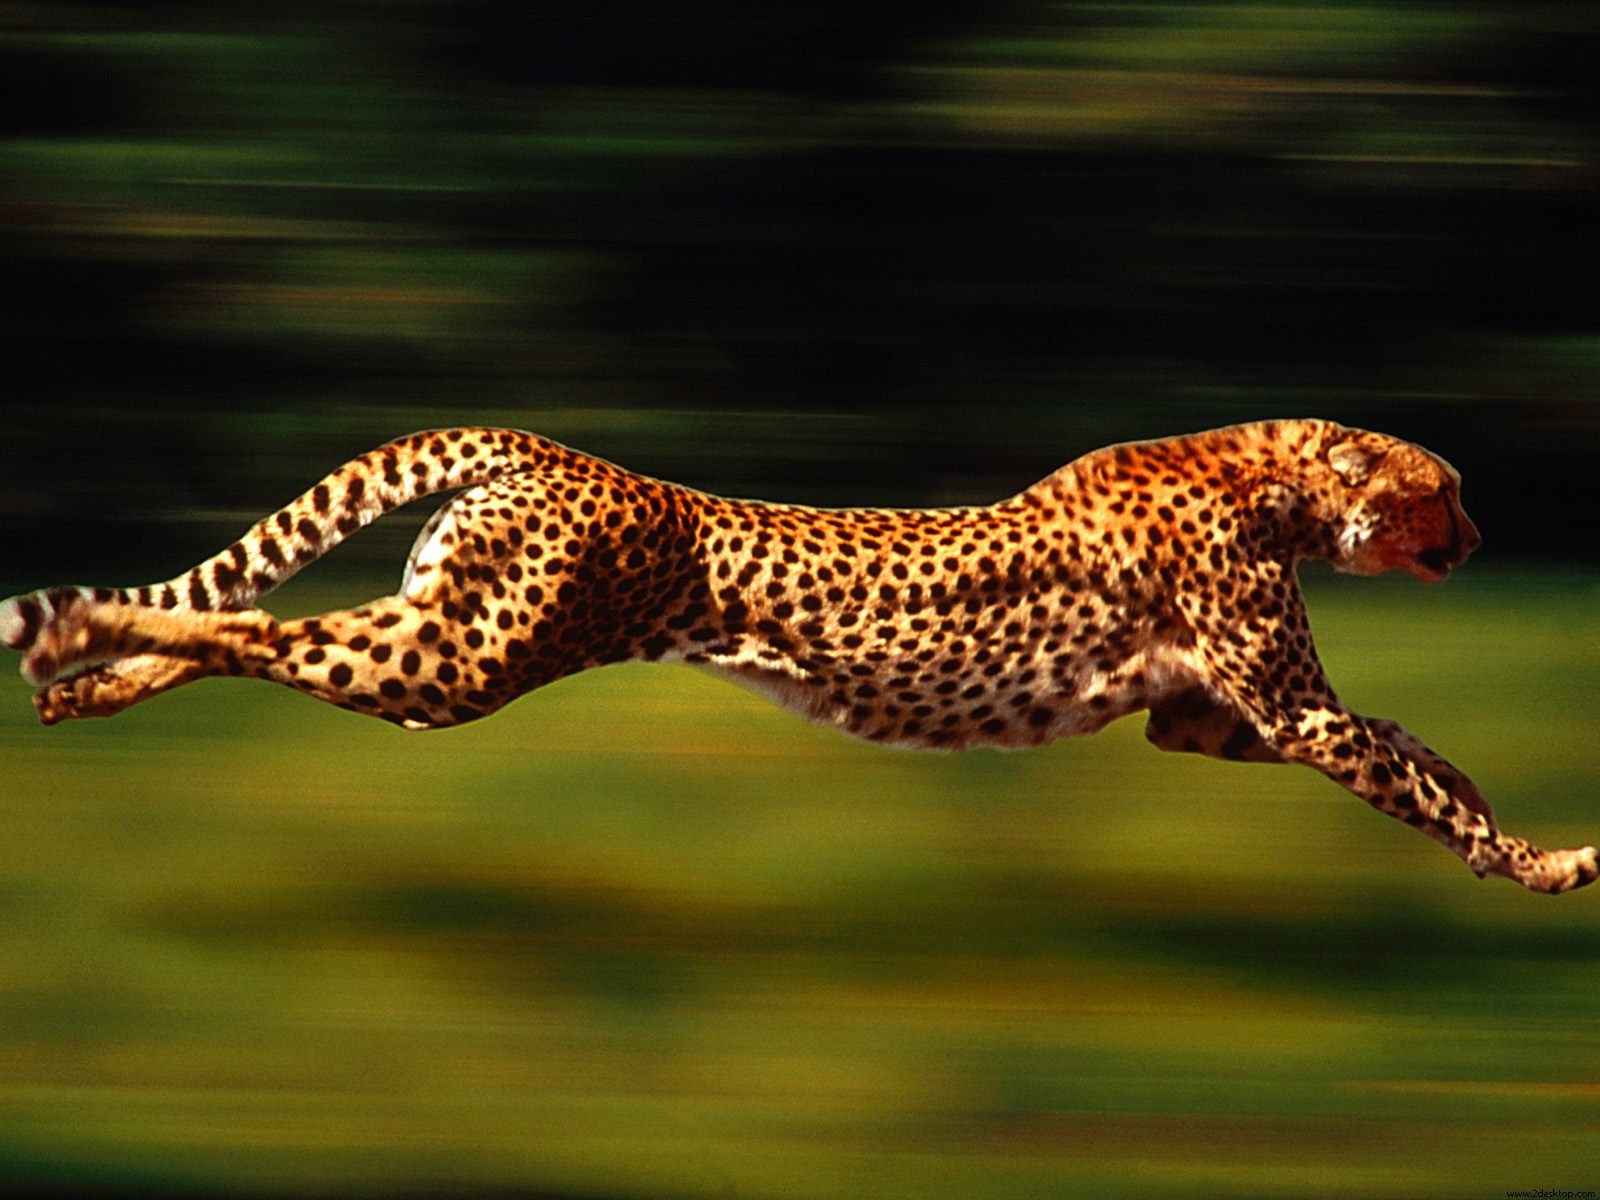 https://blogger.googleusercontent.com/img/b/R29vZ2xl/AVvXsEiEk2JDQxIuDLKHNgqPthdcJHzVST6kWirN9XyQIsmupy3DxnAnB8JwqNWl24B34VxlsTShboXUGdtqUCPHhsO2NAgYvNq5PbTSQHx6DCUwG1Z0d6aqm3VYXiRvfRr3rPoijxggmPhyV_Q/s1600/Running-cheetah-animal-wallpaper.jpg